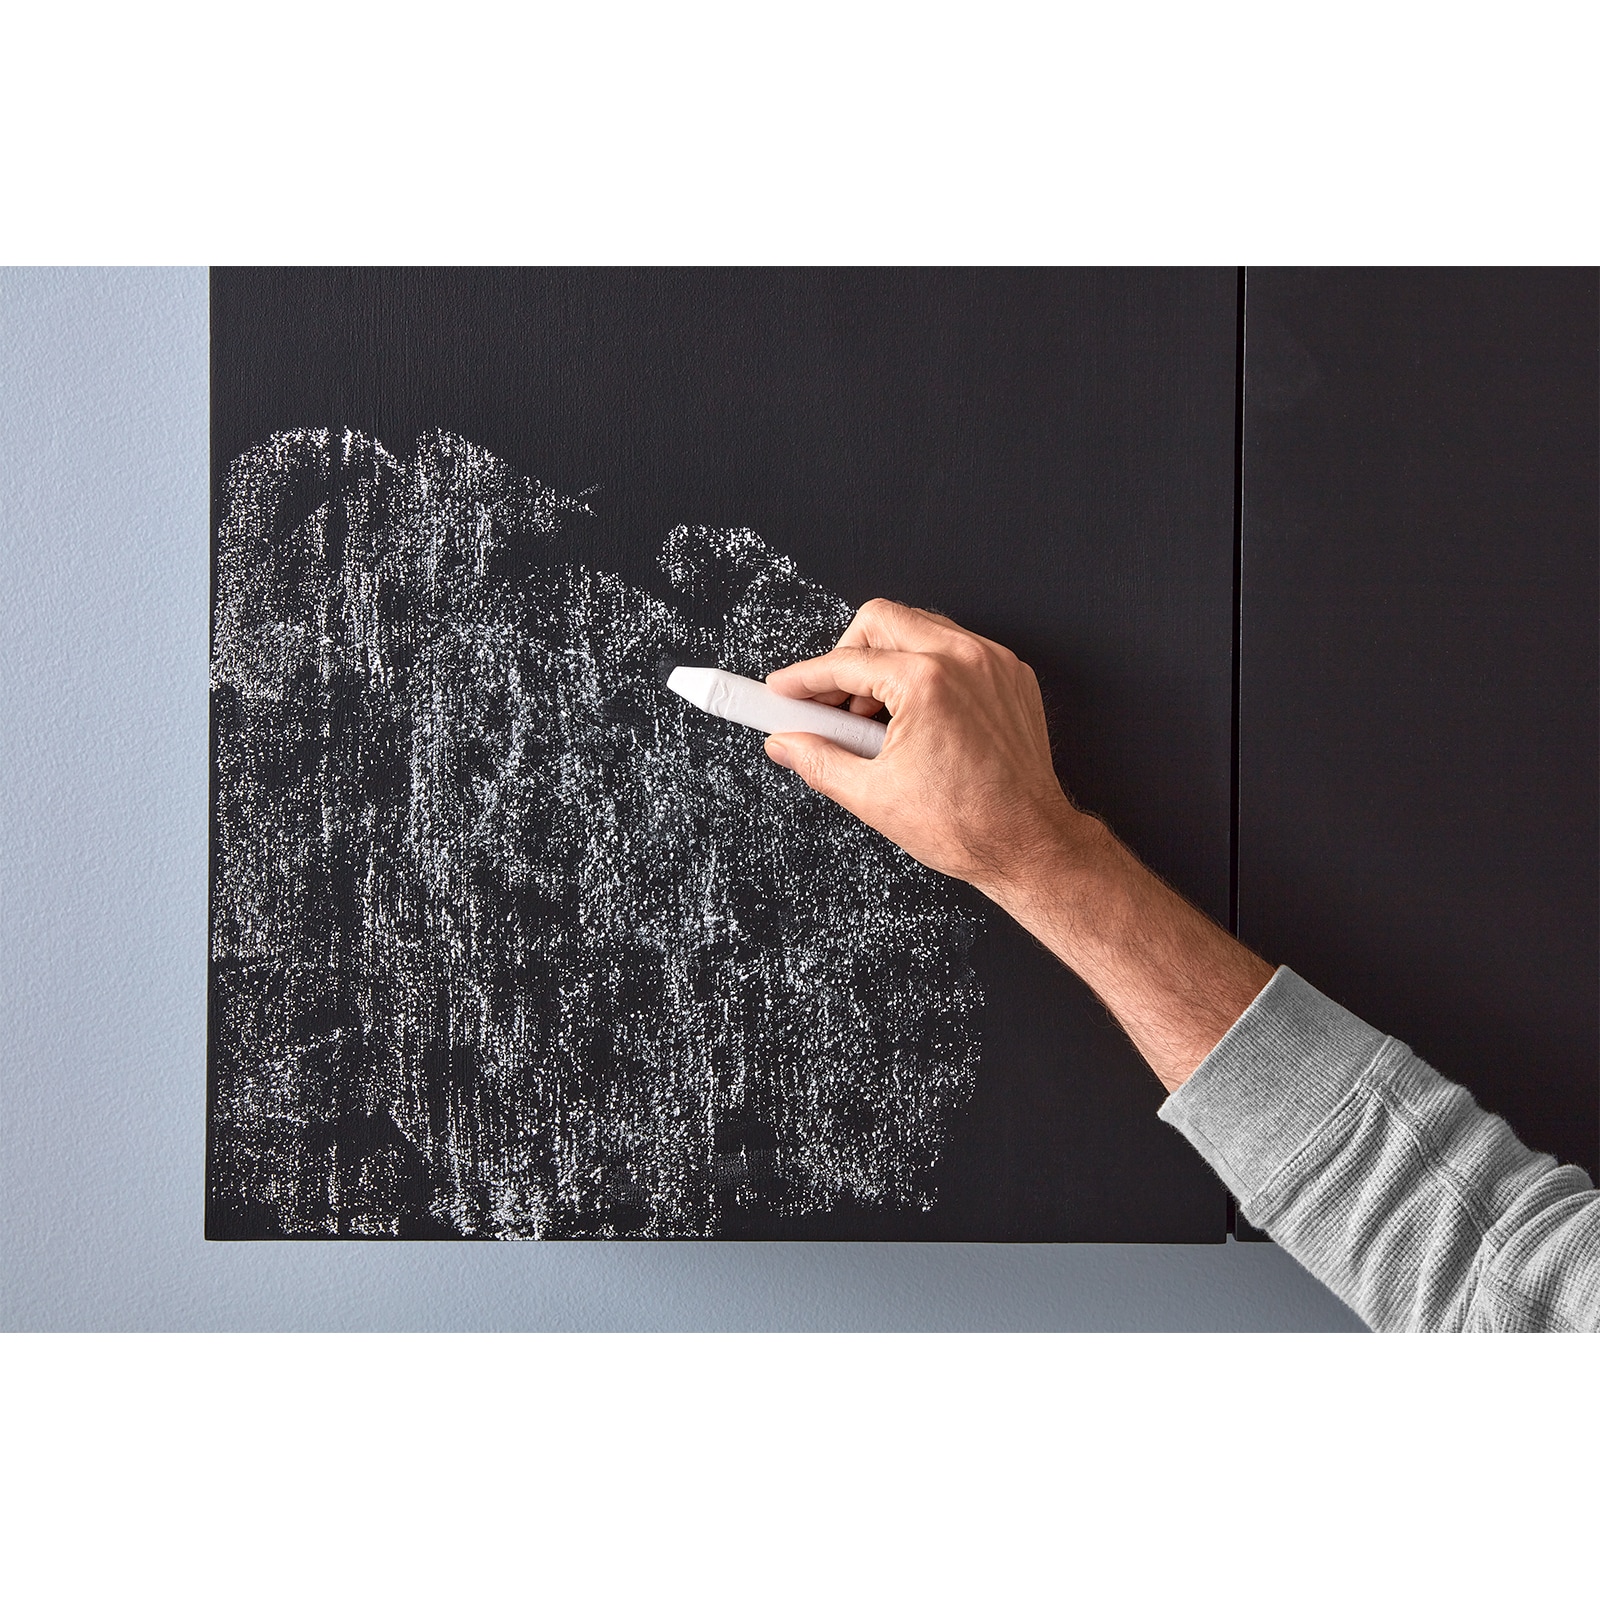 Krylon Black Latex Chalkboard Paint (1-quart) in the Craft Paint department  at